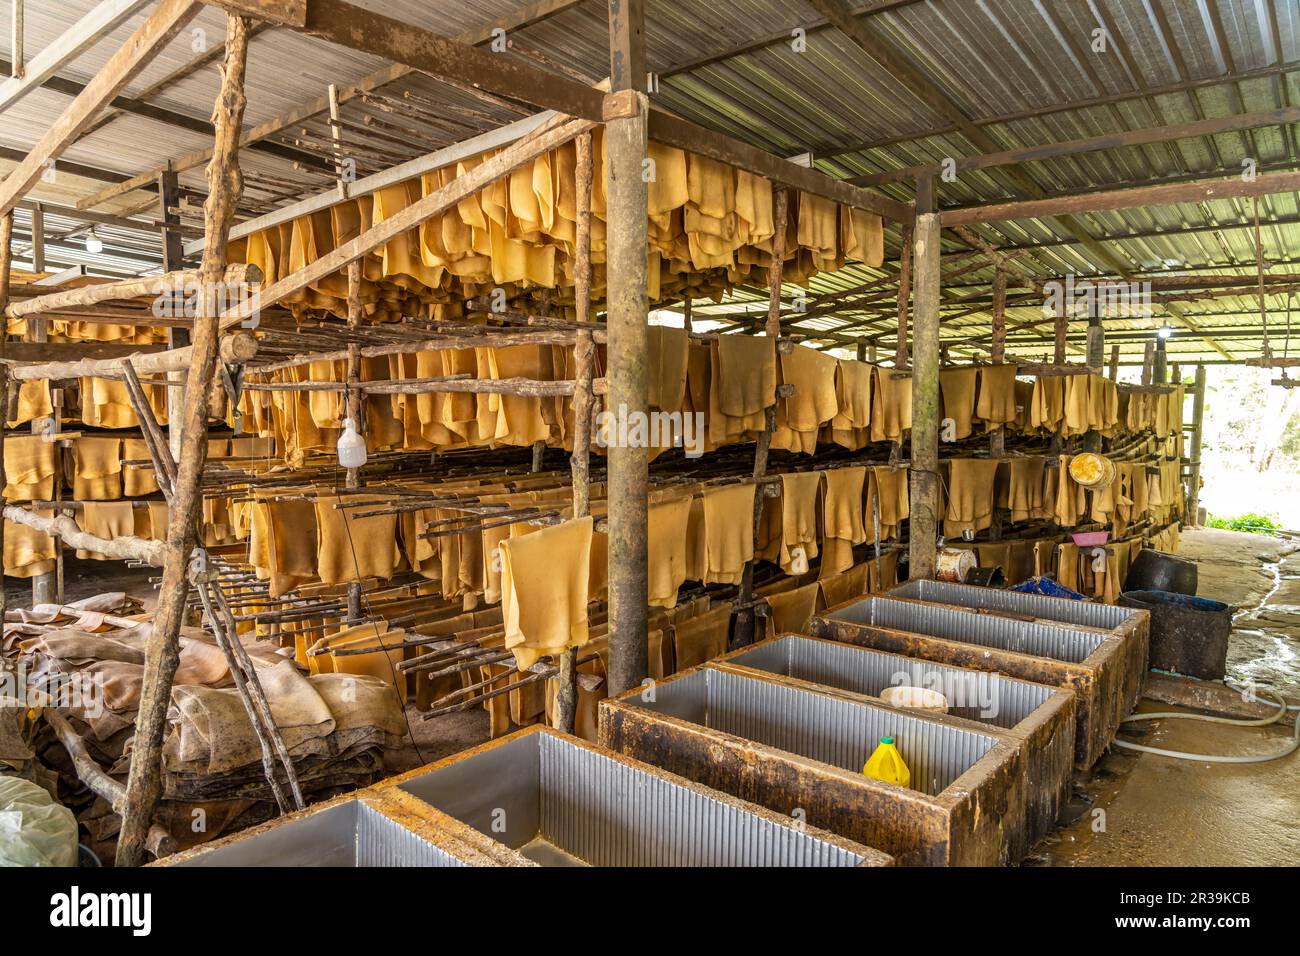 Kautschuk Produktion auf der Insel Koh Libong in der Andamanensee, Thailandia, Asien | produzione di gomma naturale su Ko Libong, isola delle Andamane Foto Stock